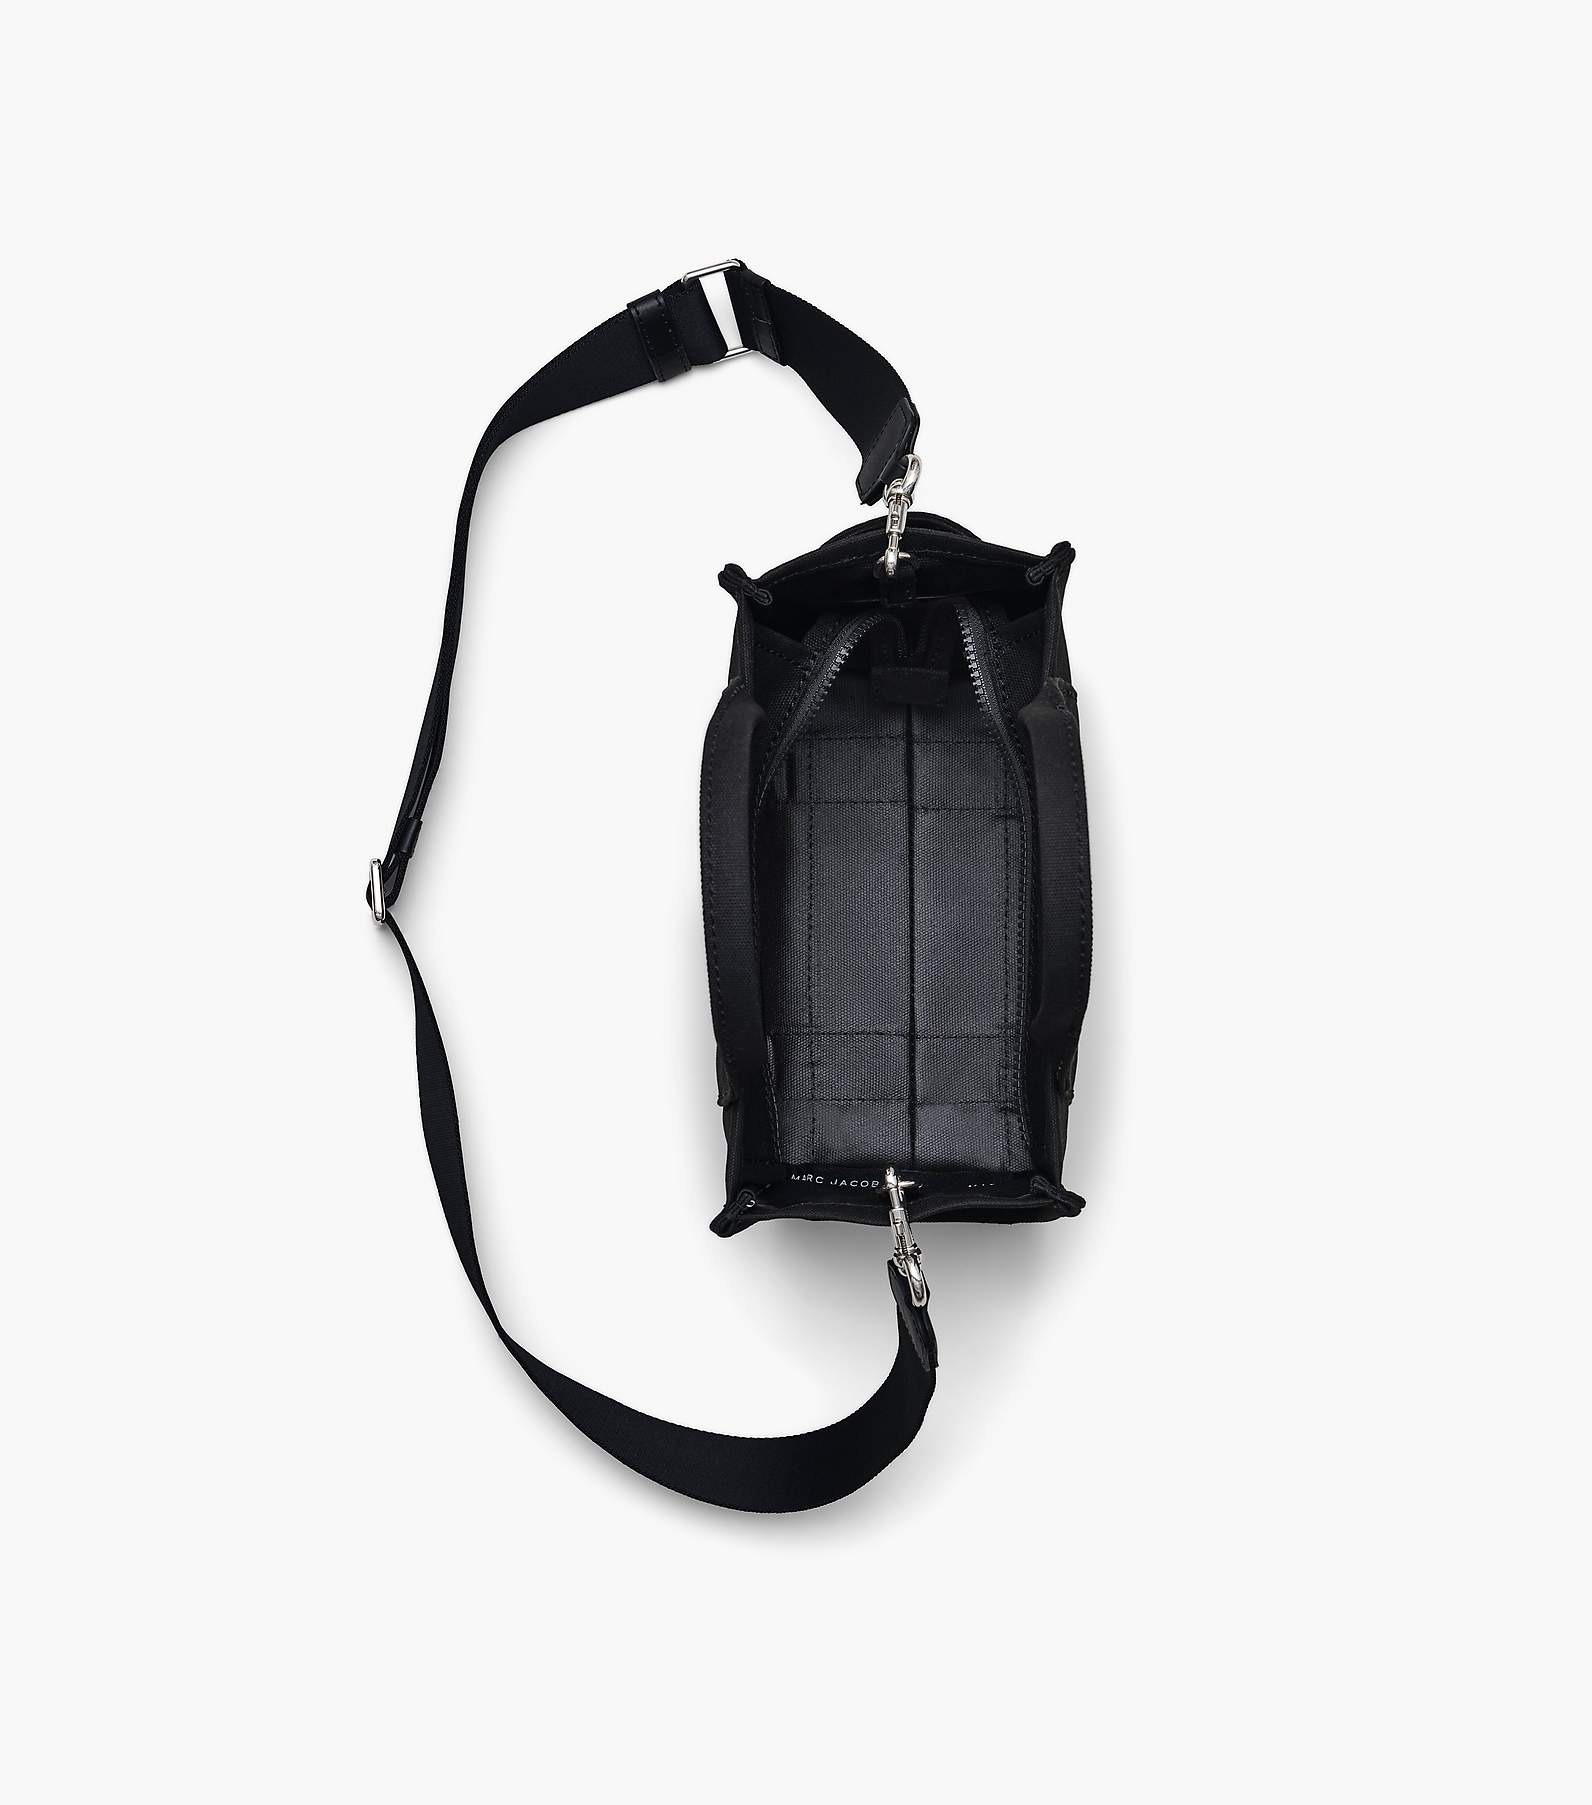 The Leather Mini Bucket Bag, Marc Jacobs